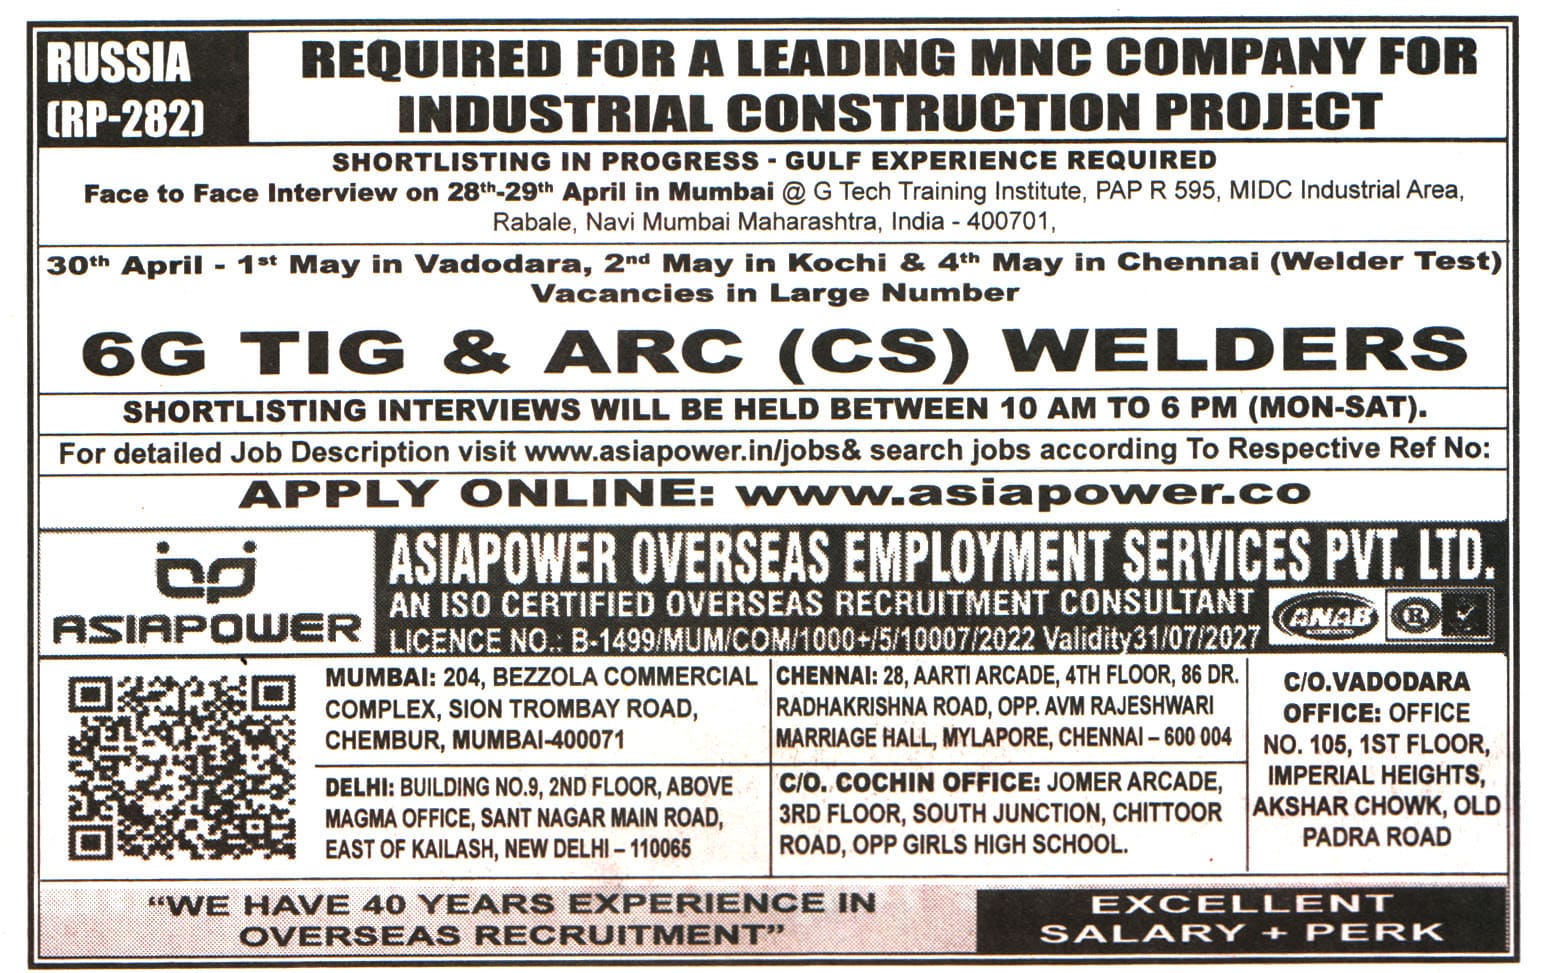 Jobs in Russia for 6G TIG & ARC Welders